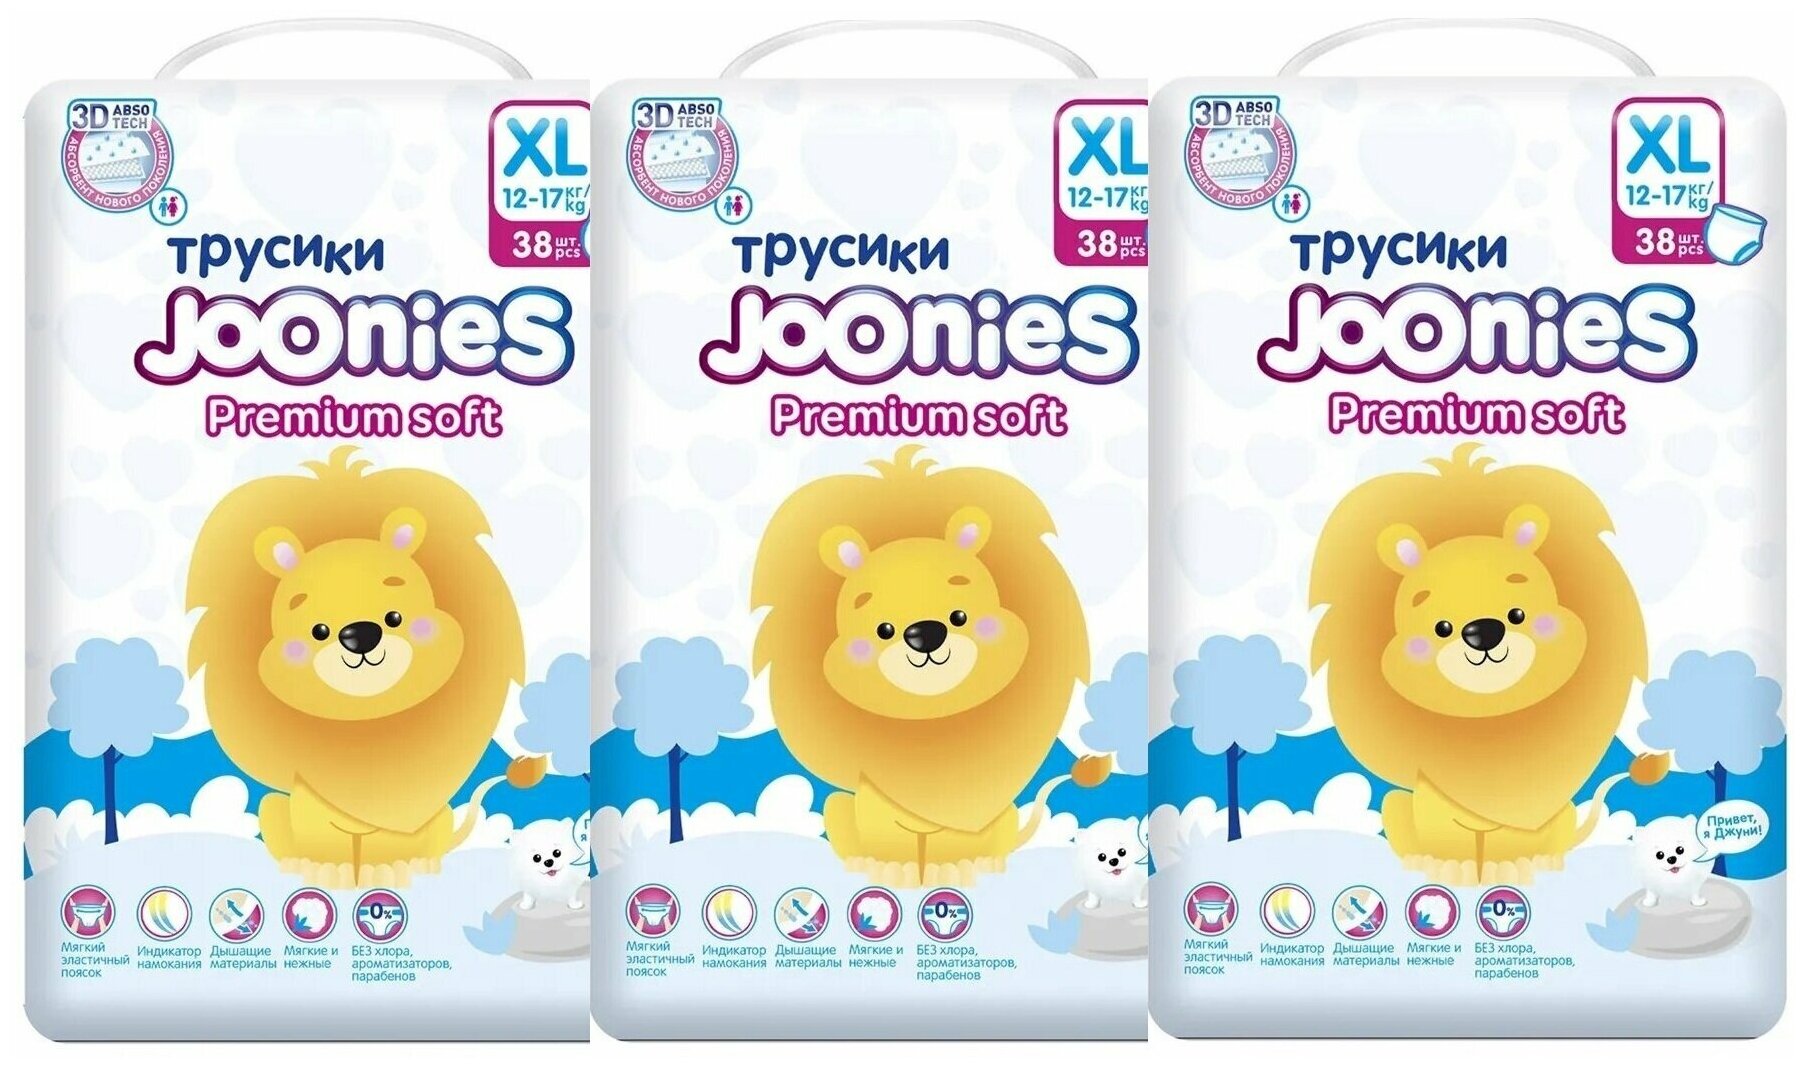 Joonies трусики Premium Soft XL (12-17 кг), 114 шт.